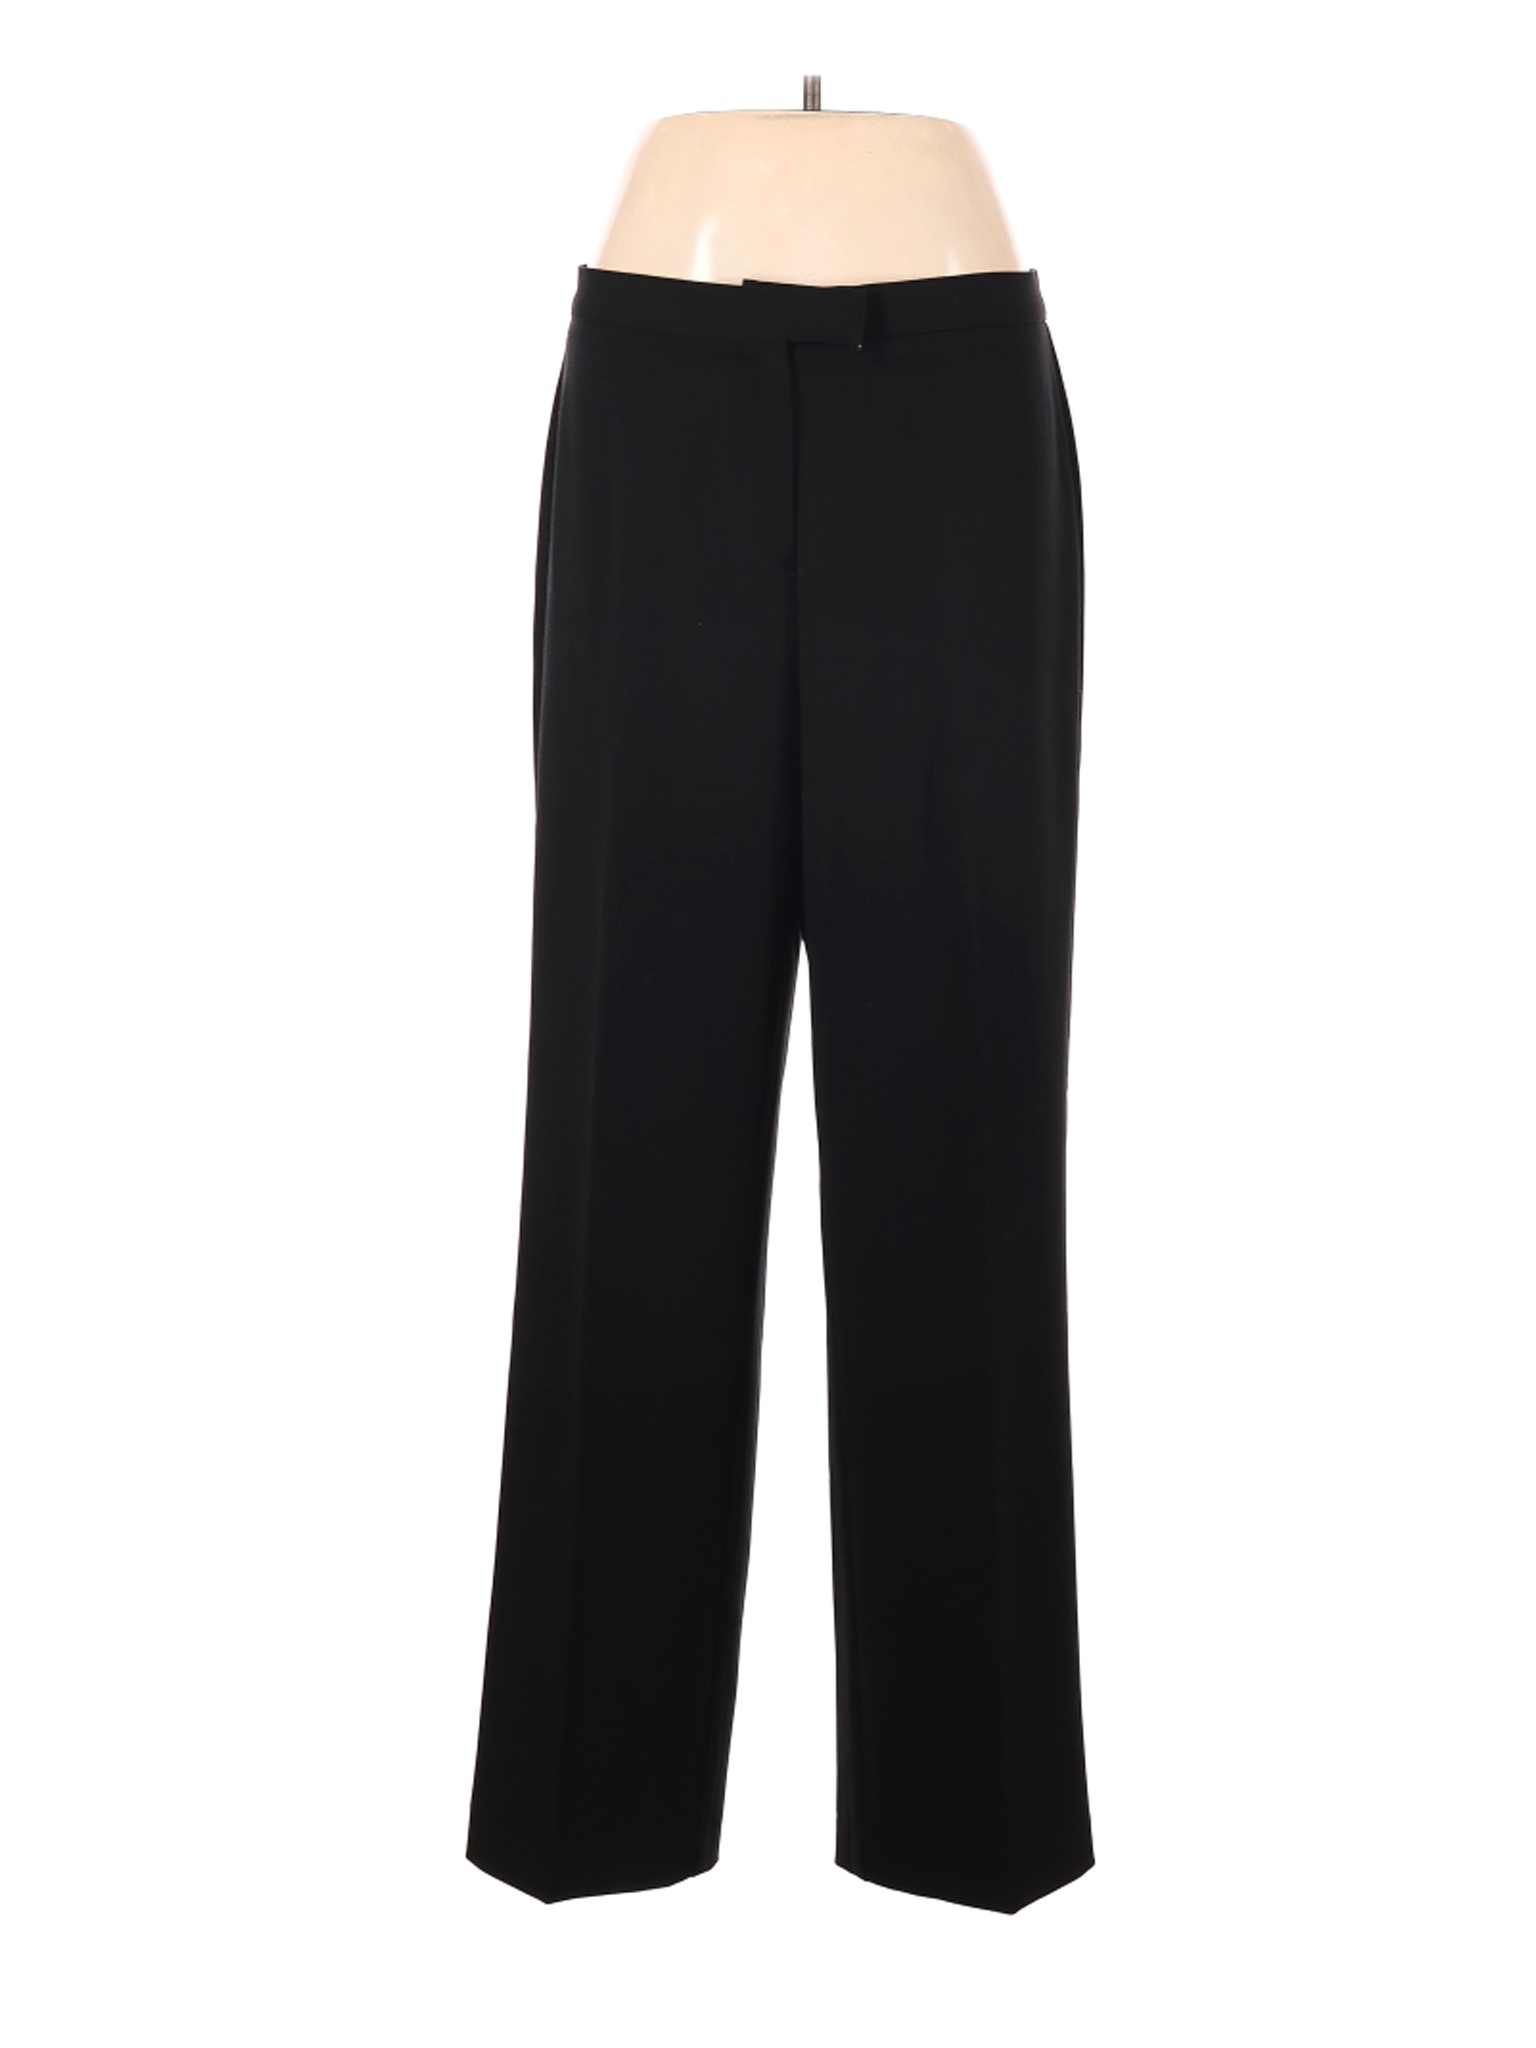 Koret Women Black Dress Pants 14 | eBay